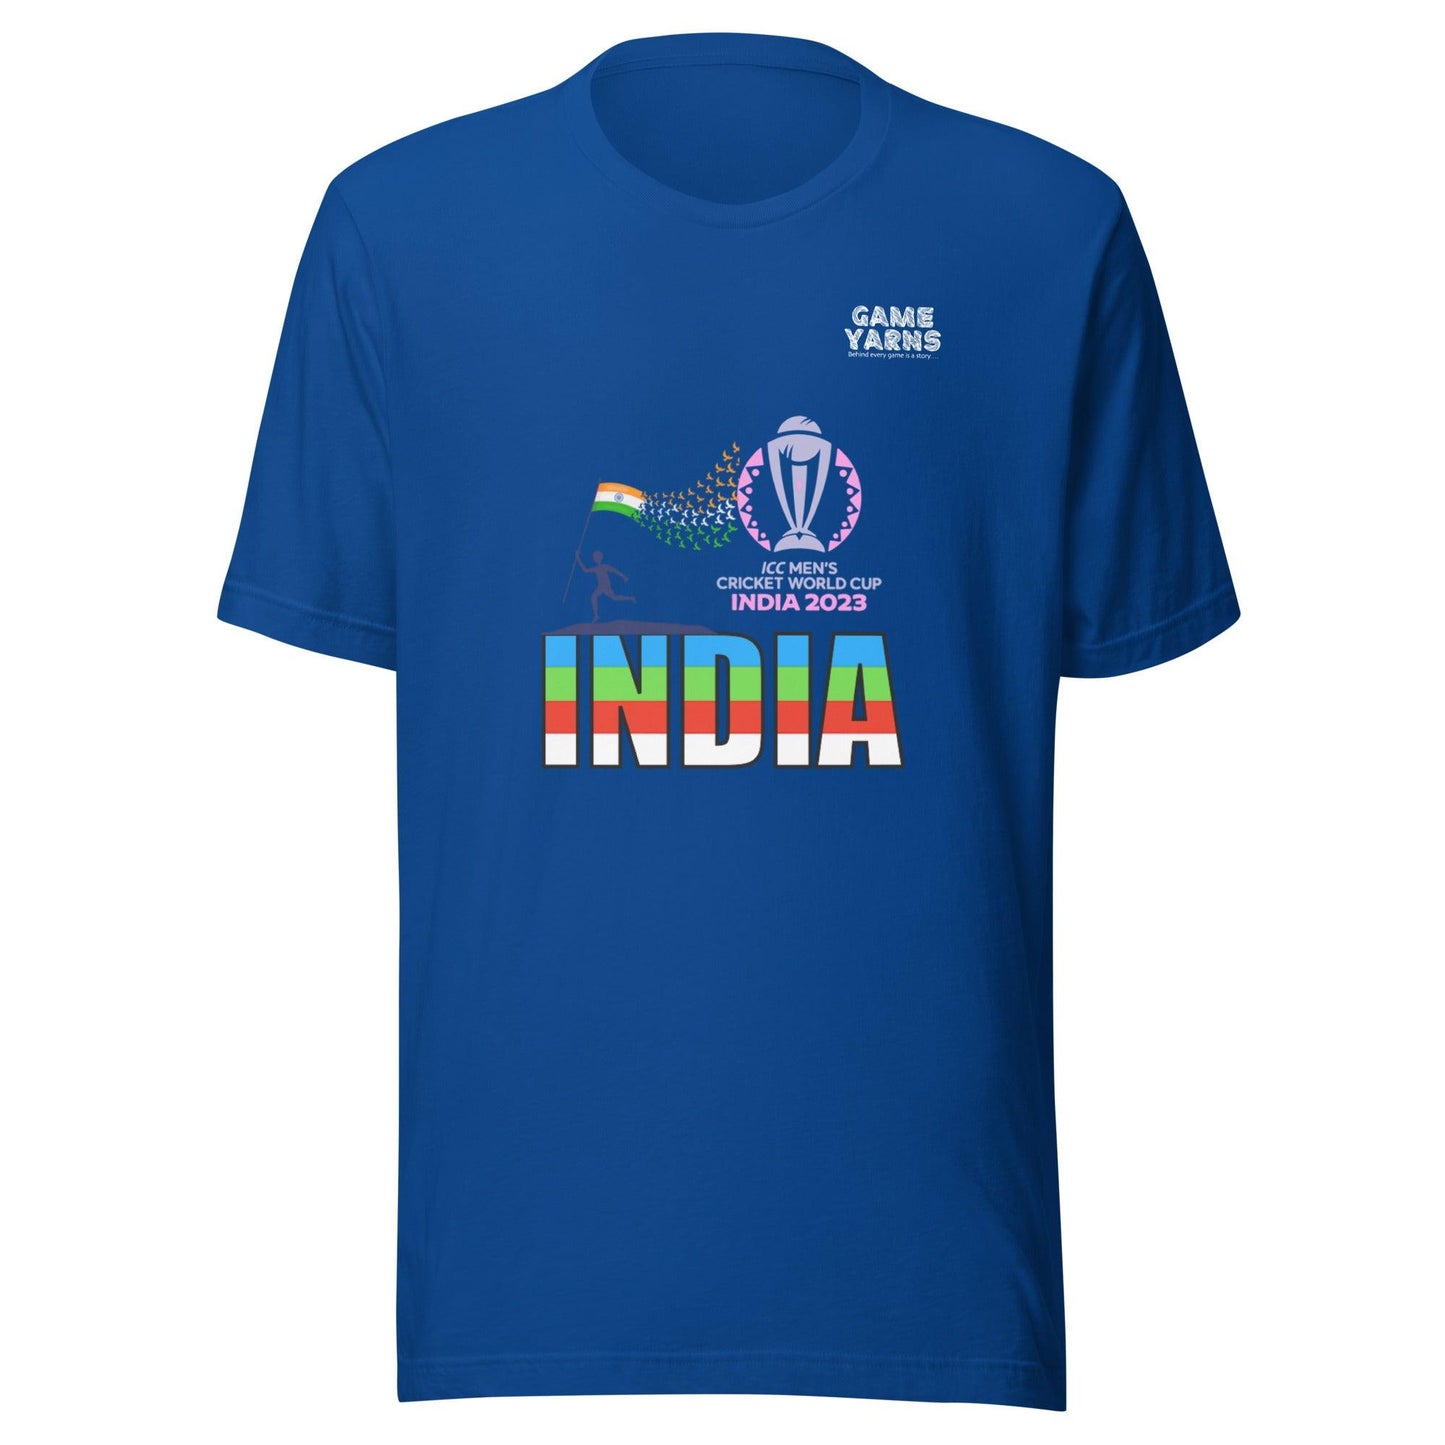 India World Cup Cricket 2023 - Game Yarns